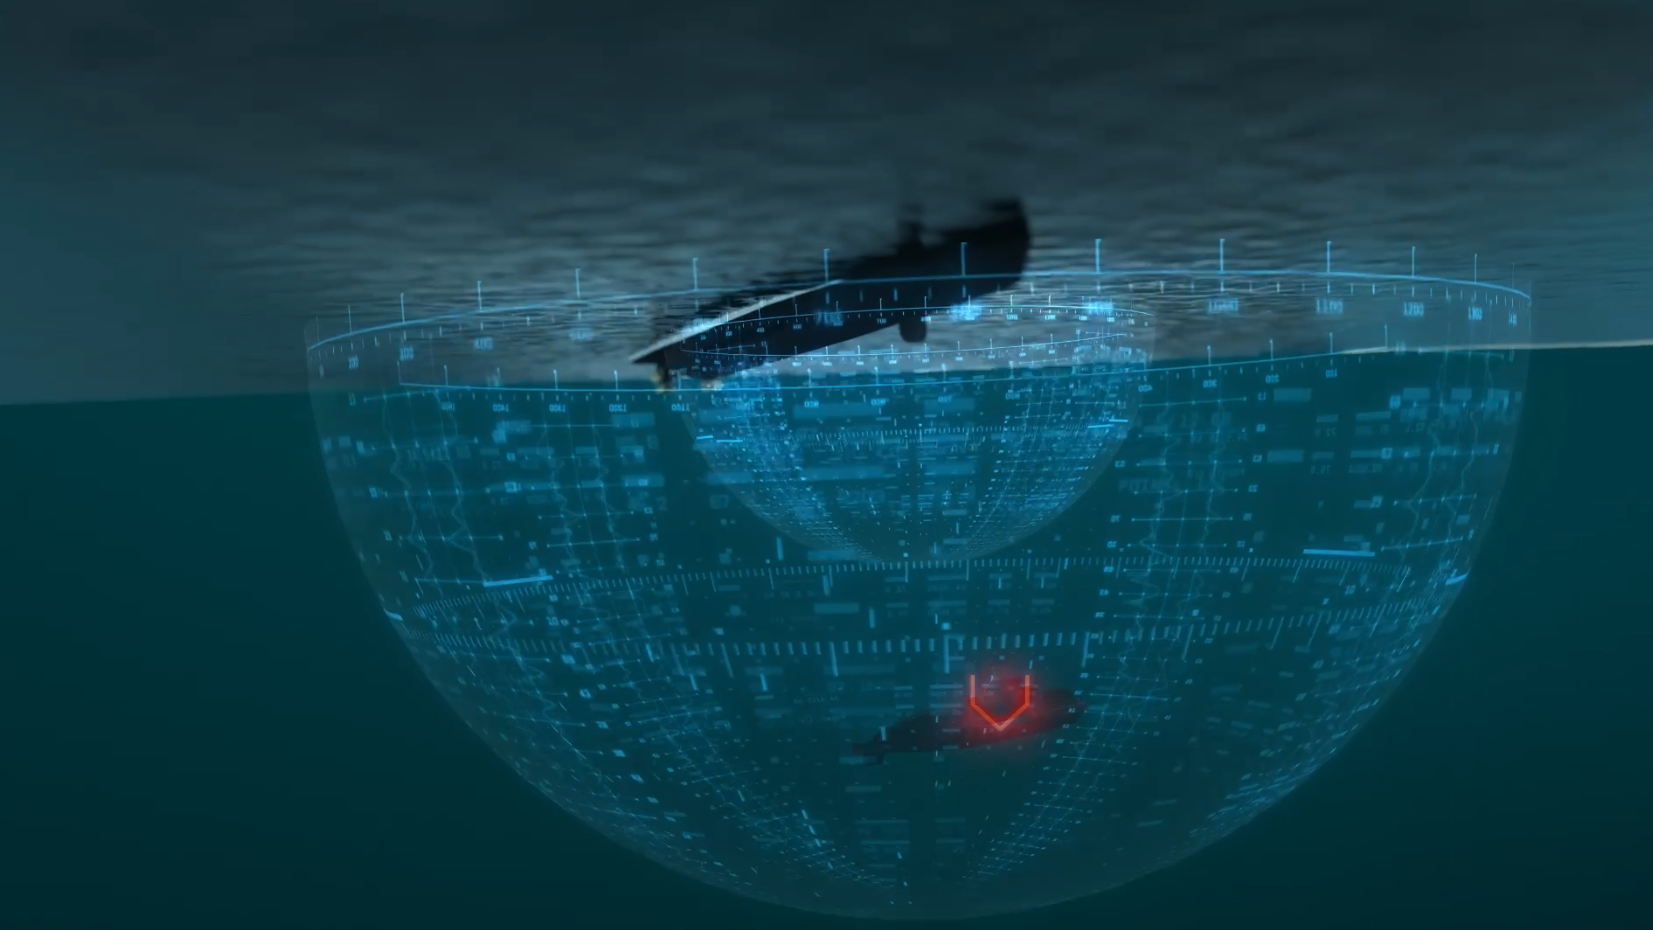 Ship sonar pinging off of submarine